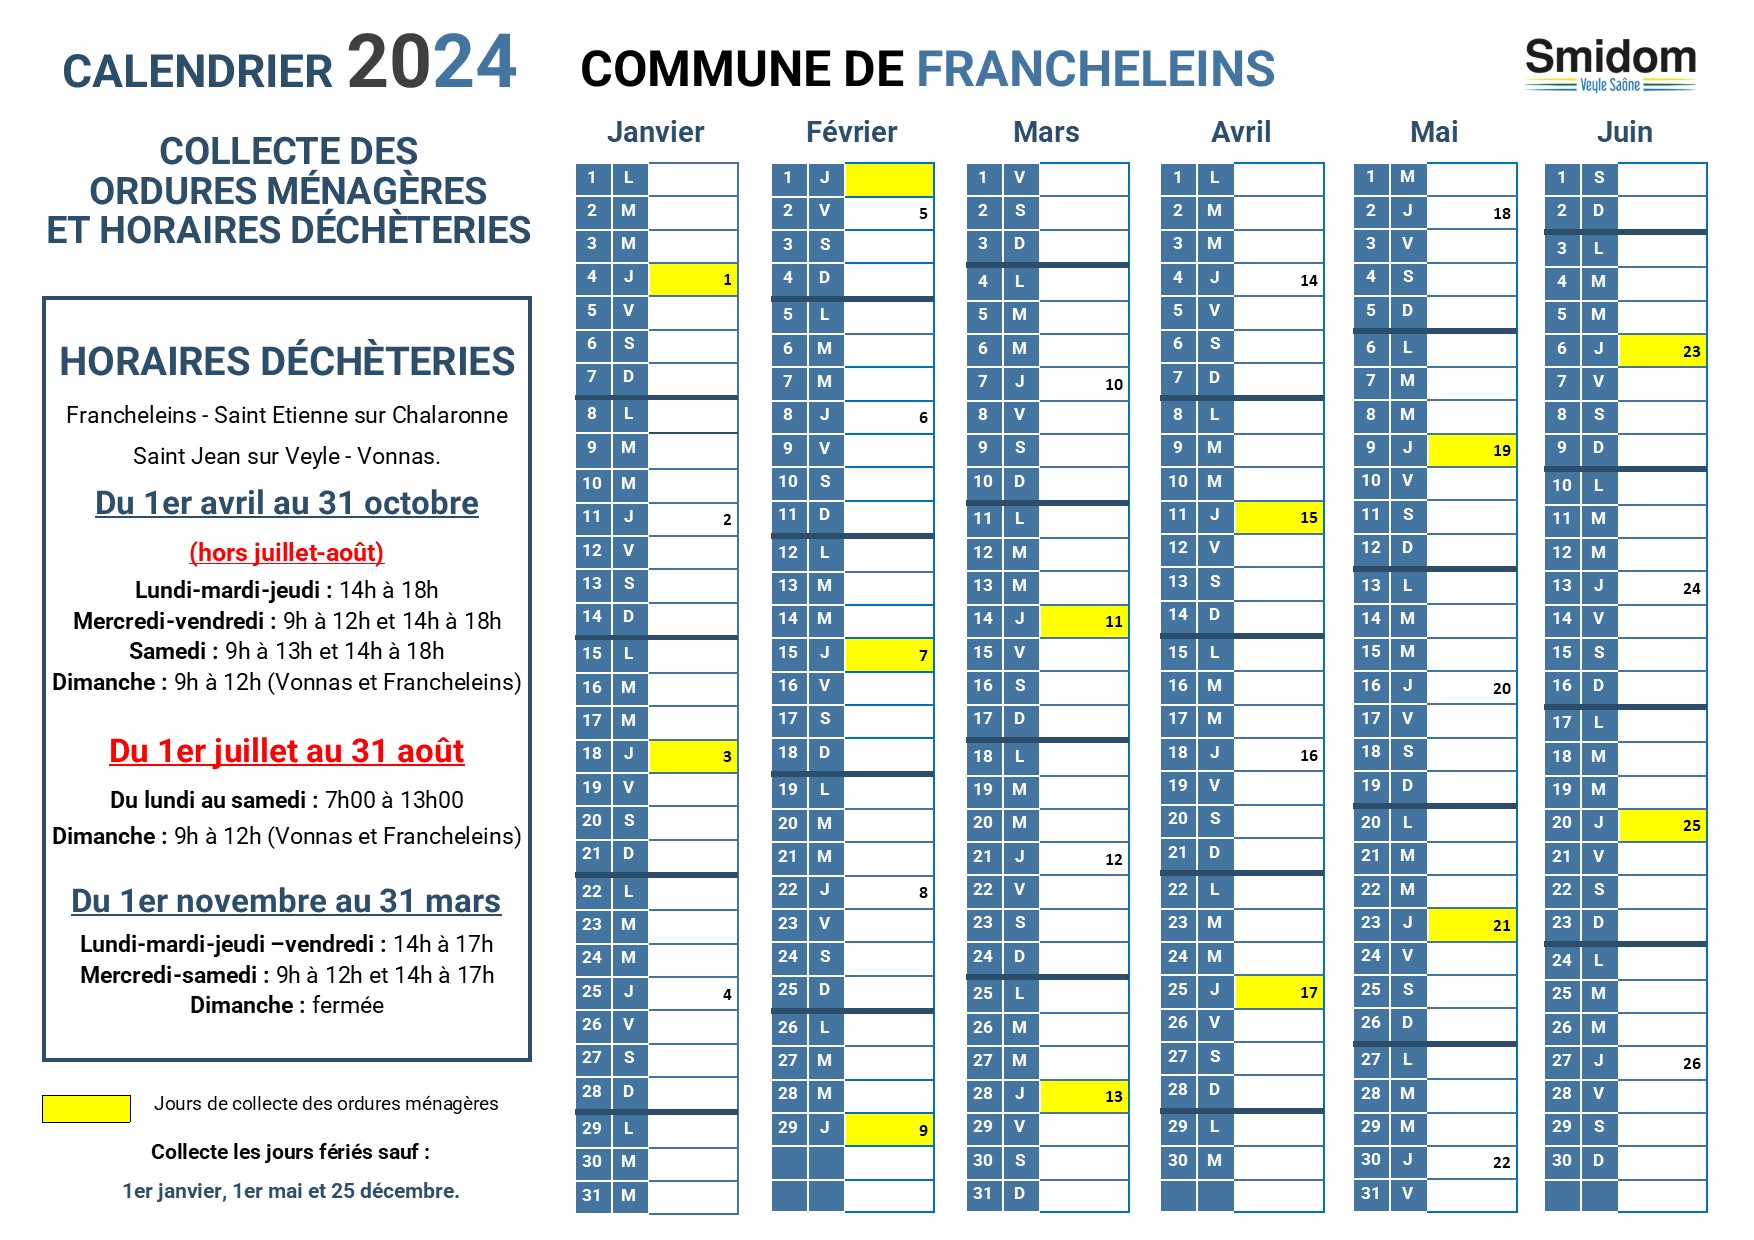 FRANCHELEINS - Calendrier 2024 - 1.jpg